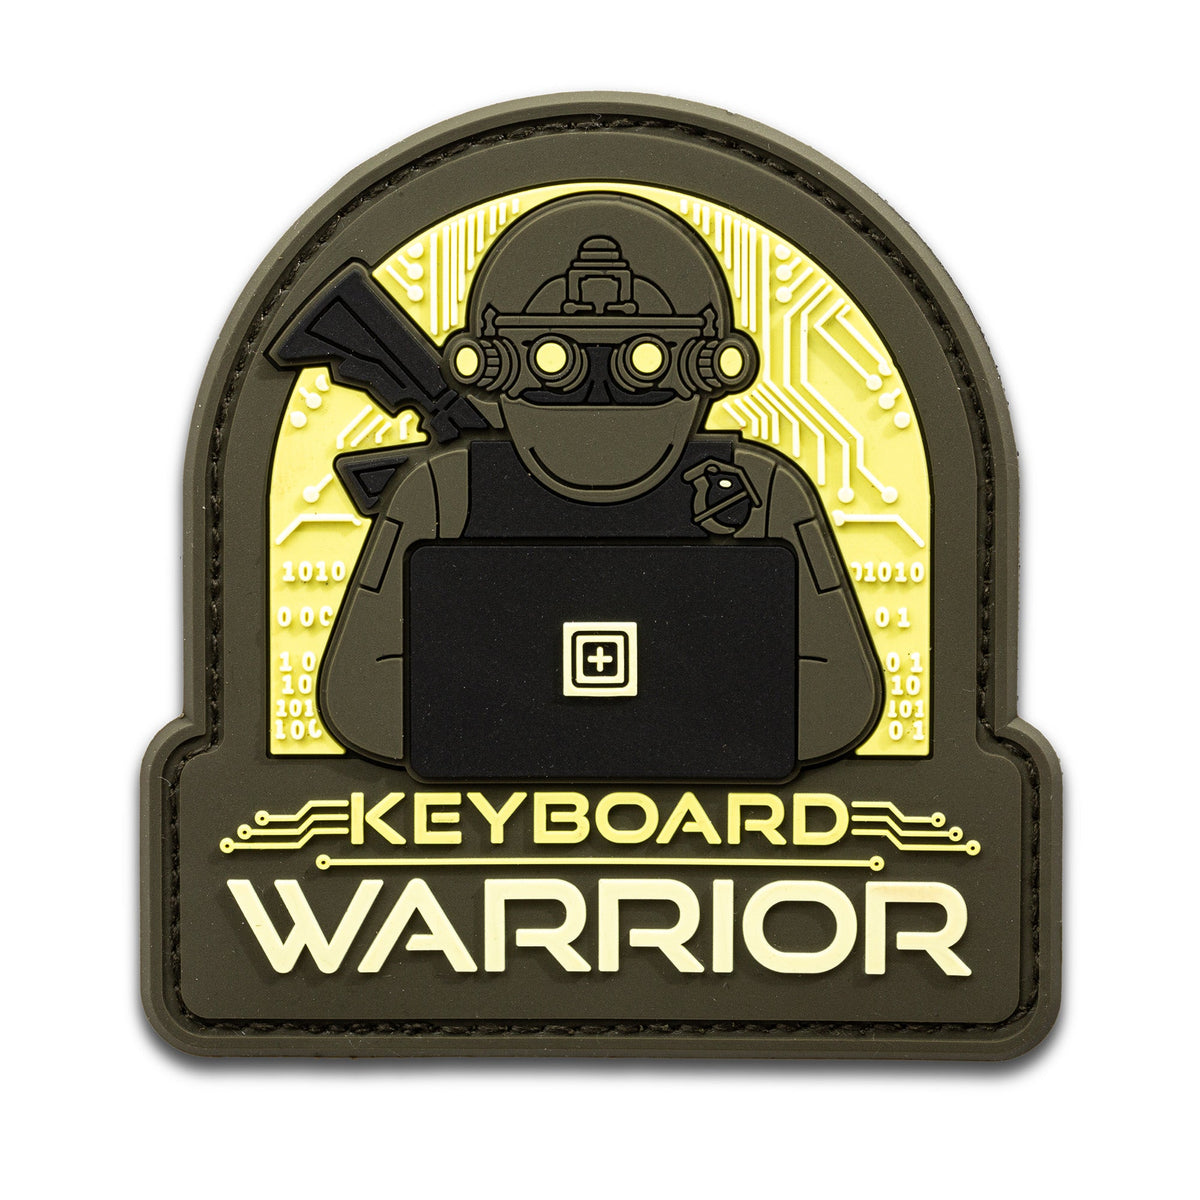 5.11 Tactical Keyboard Warrior Patch Tactical Gear Australia Supplier Distributor Dealer